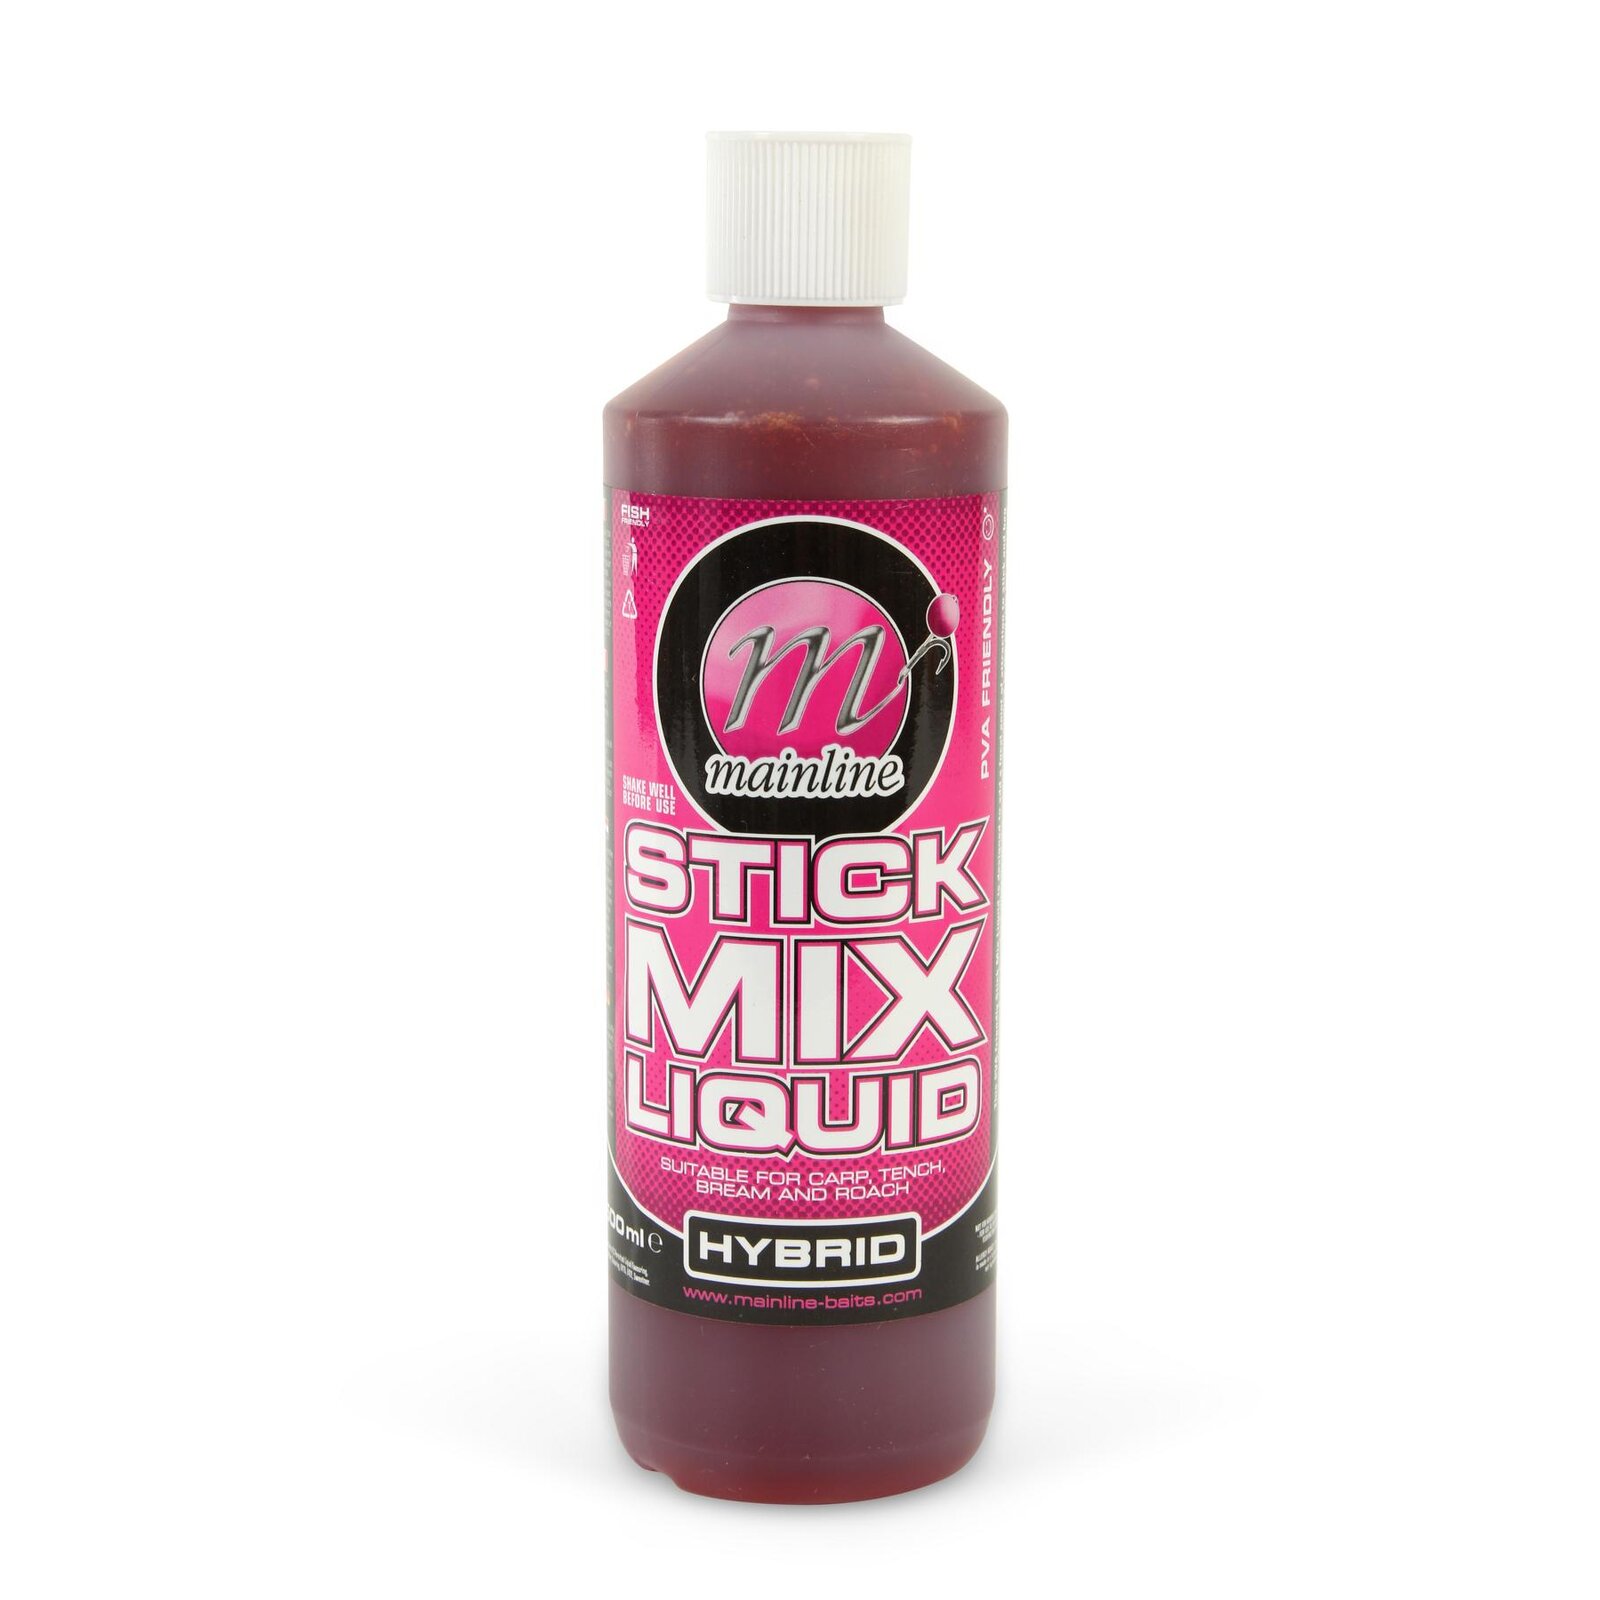 Mainline Stick Mix Liquid - Hybrid 500 ml